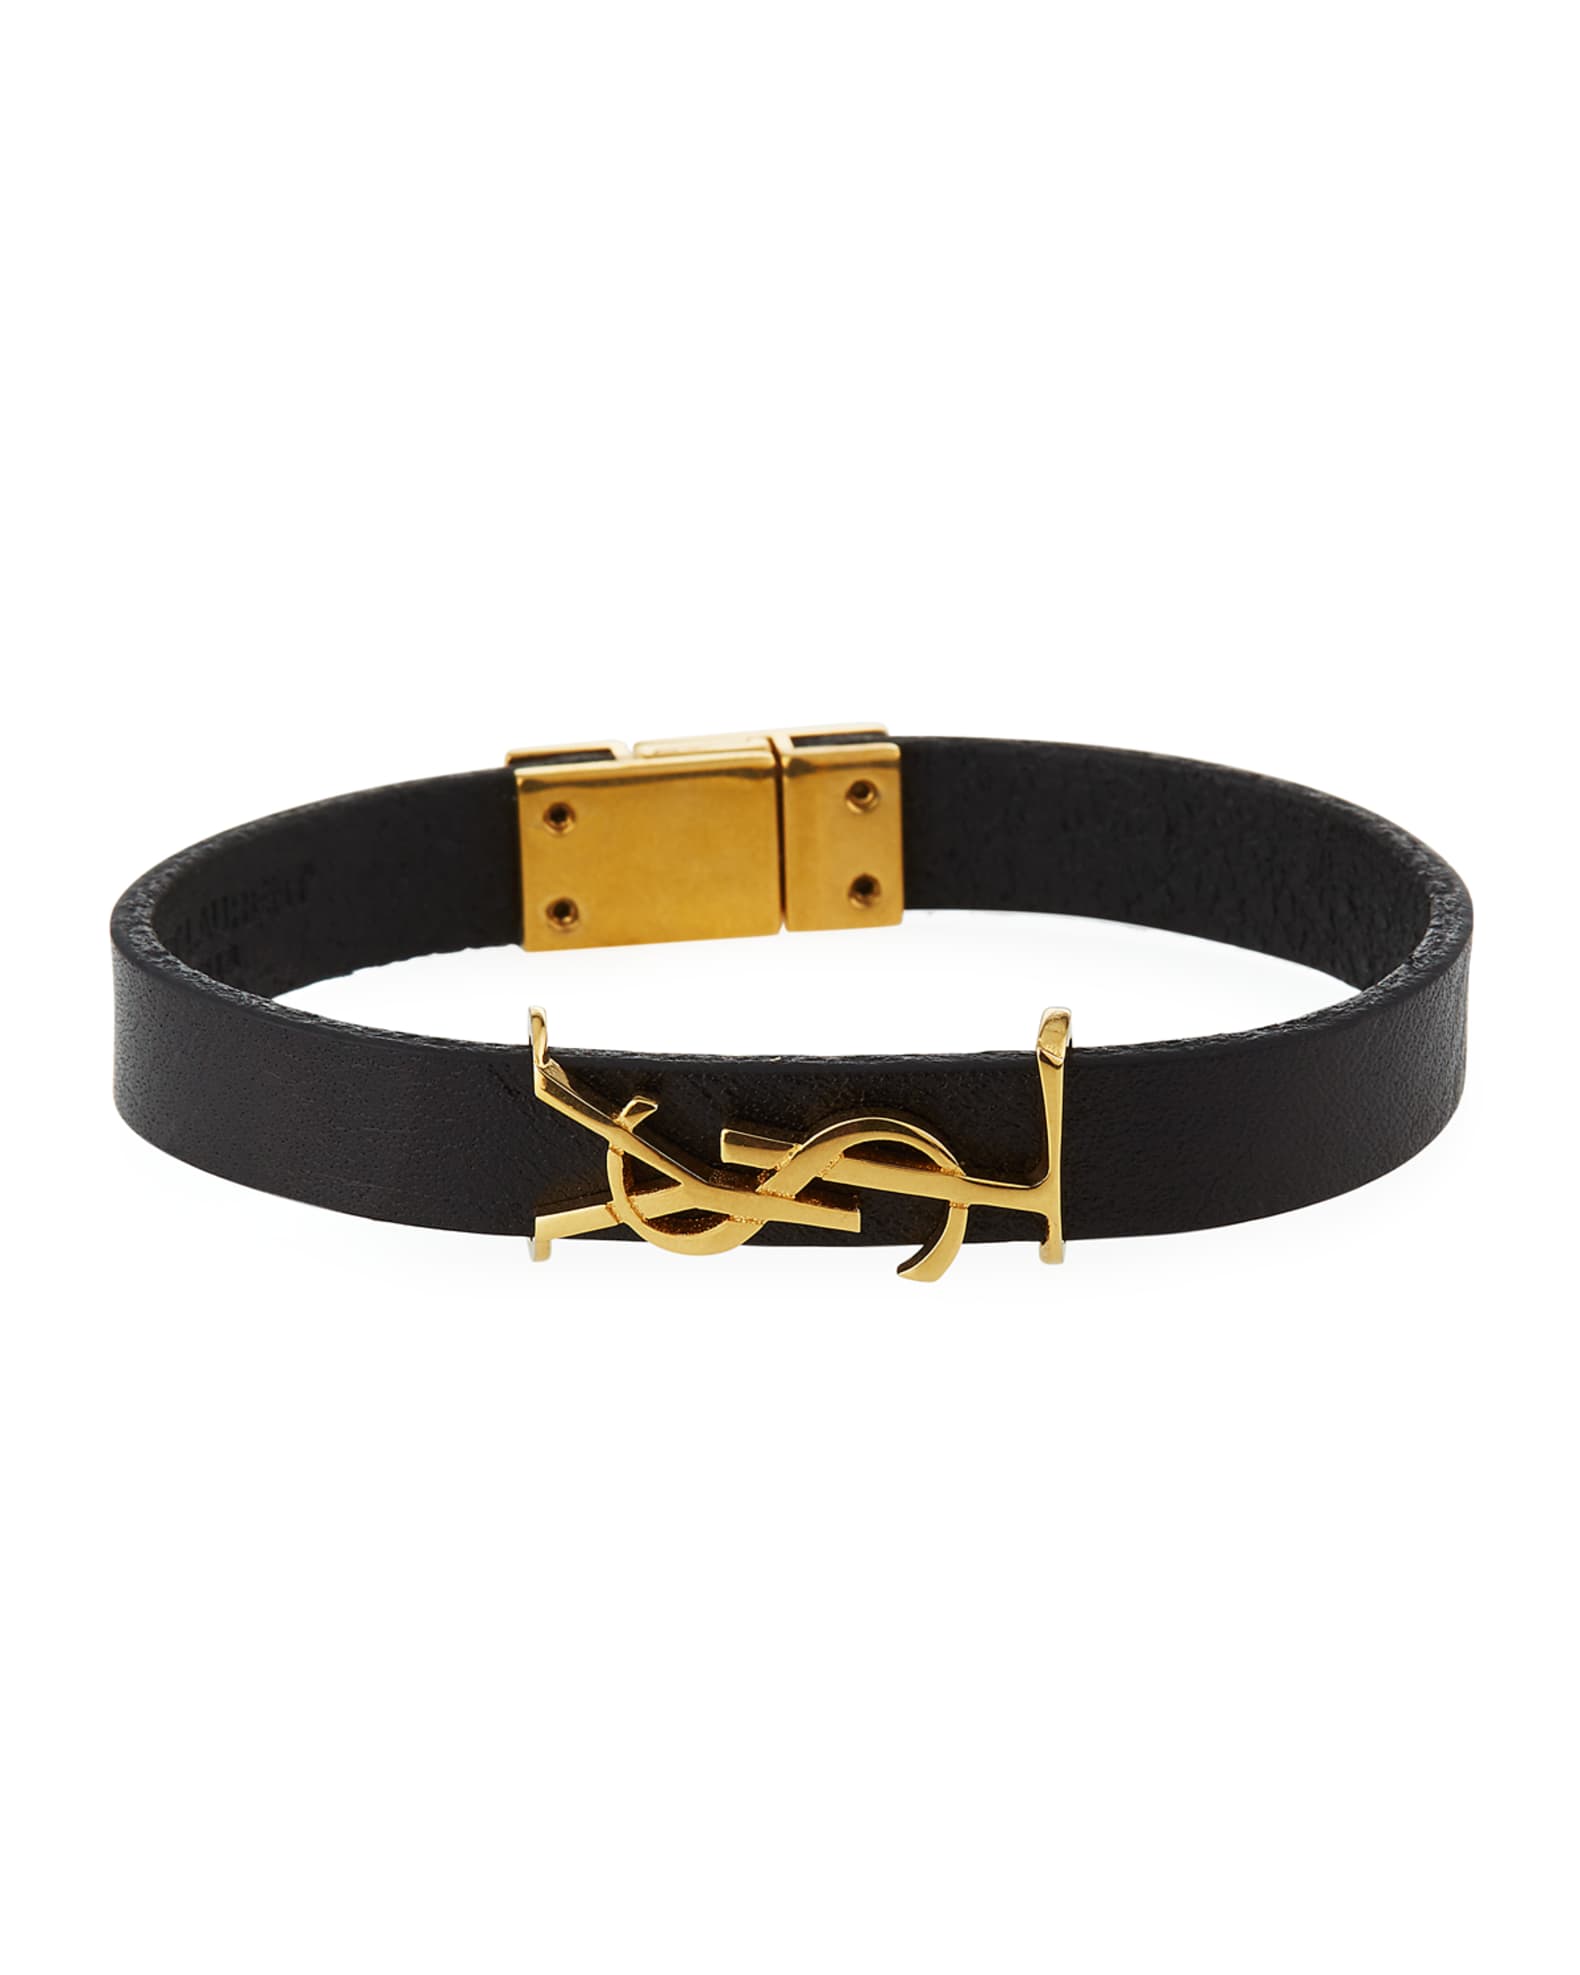 Saint Laurent Leather YSL Monogram Bracelet, Black/Gold